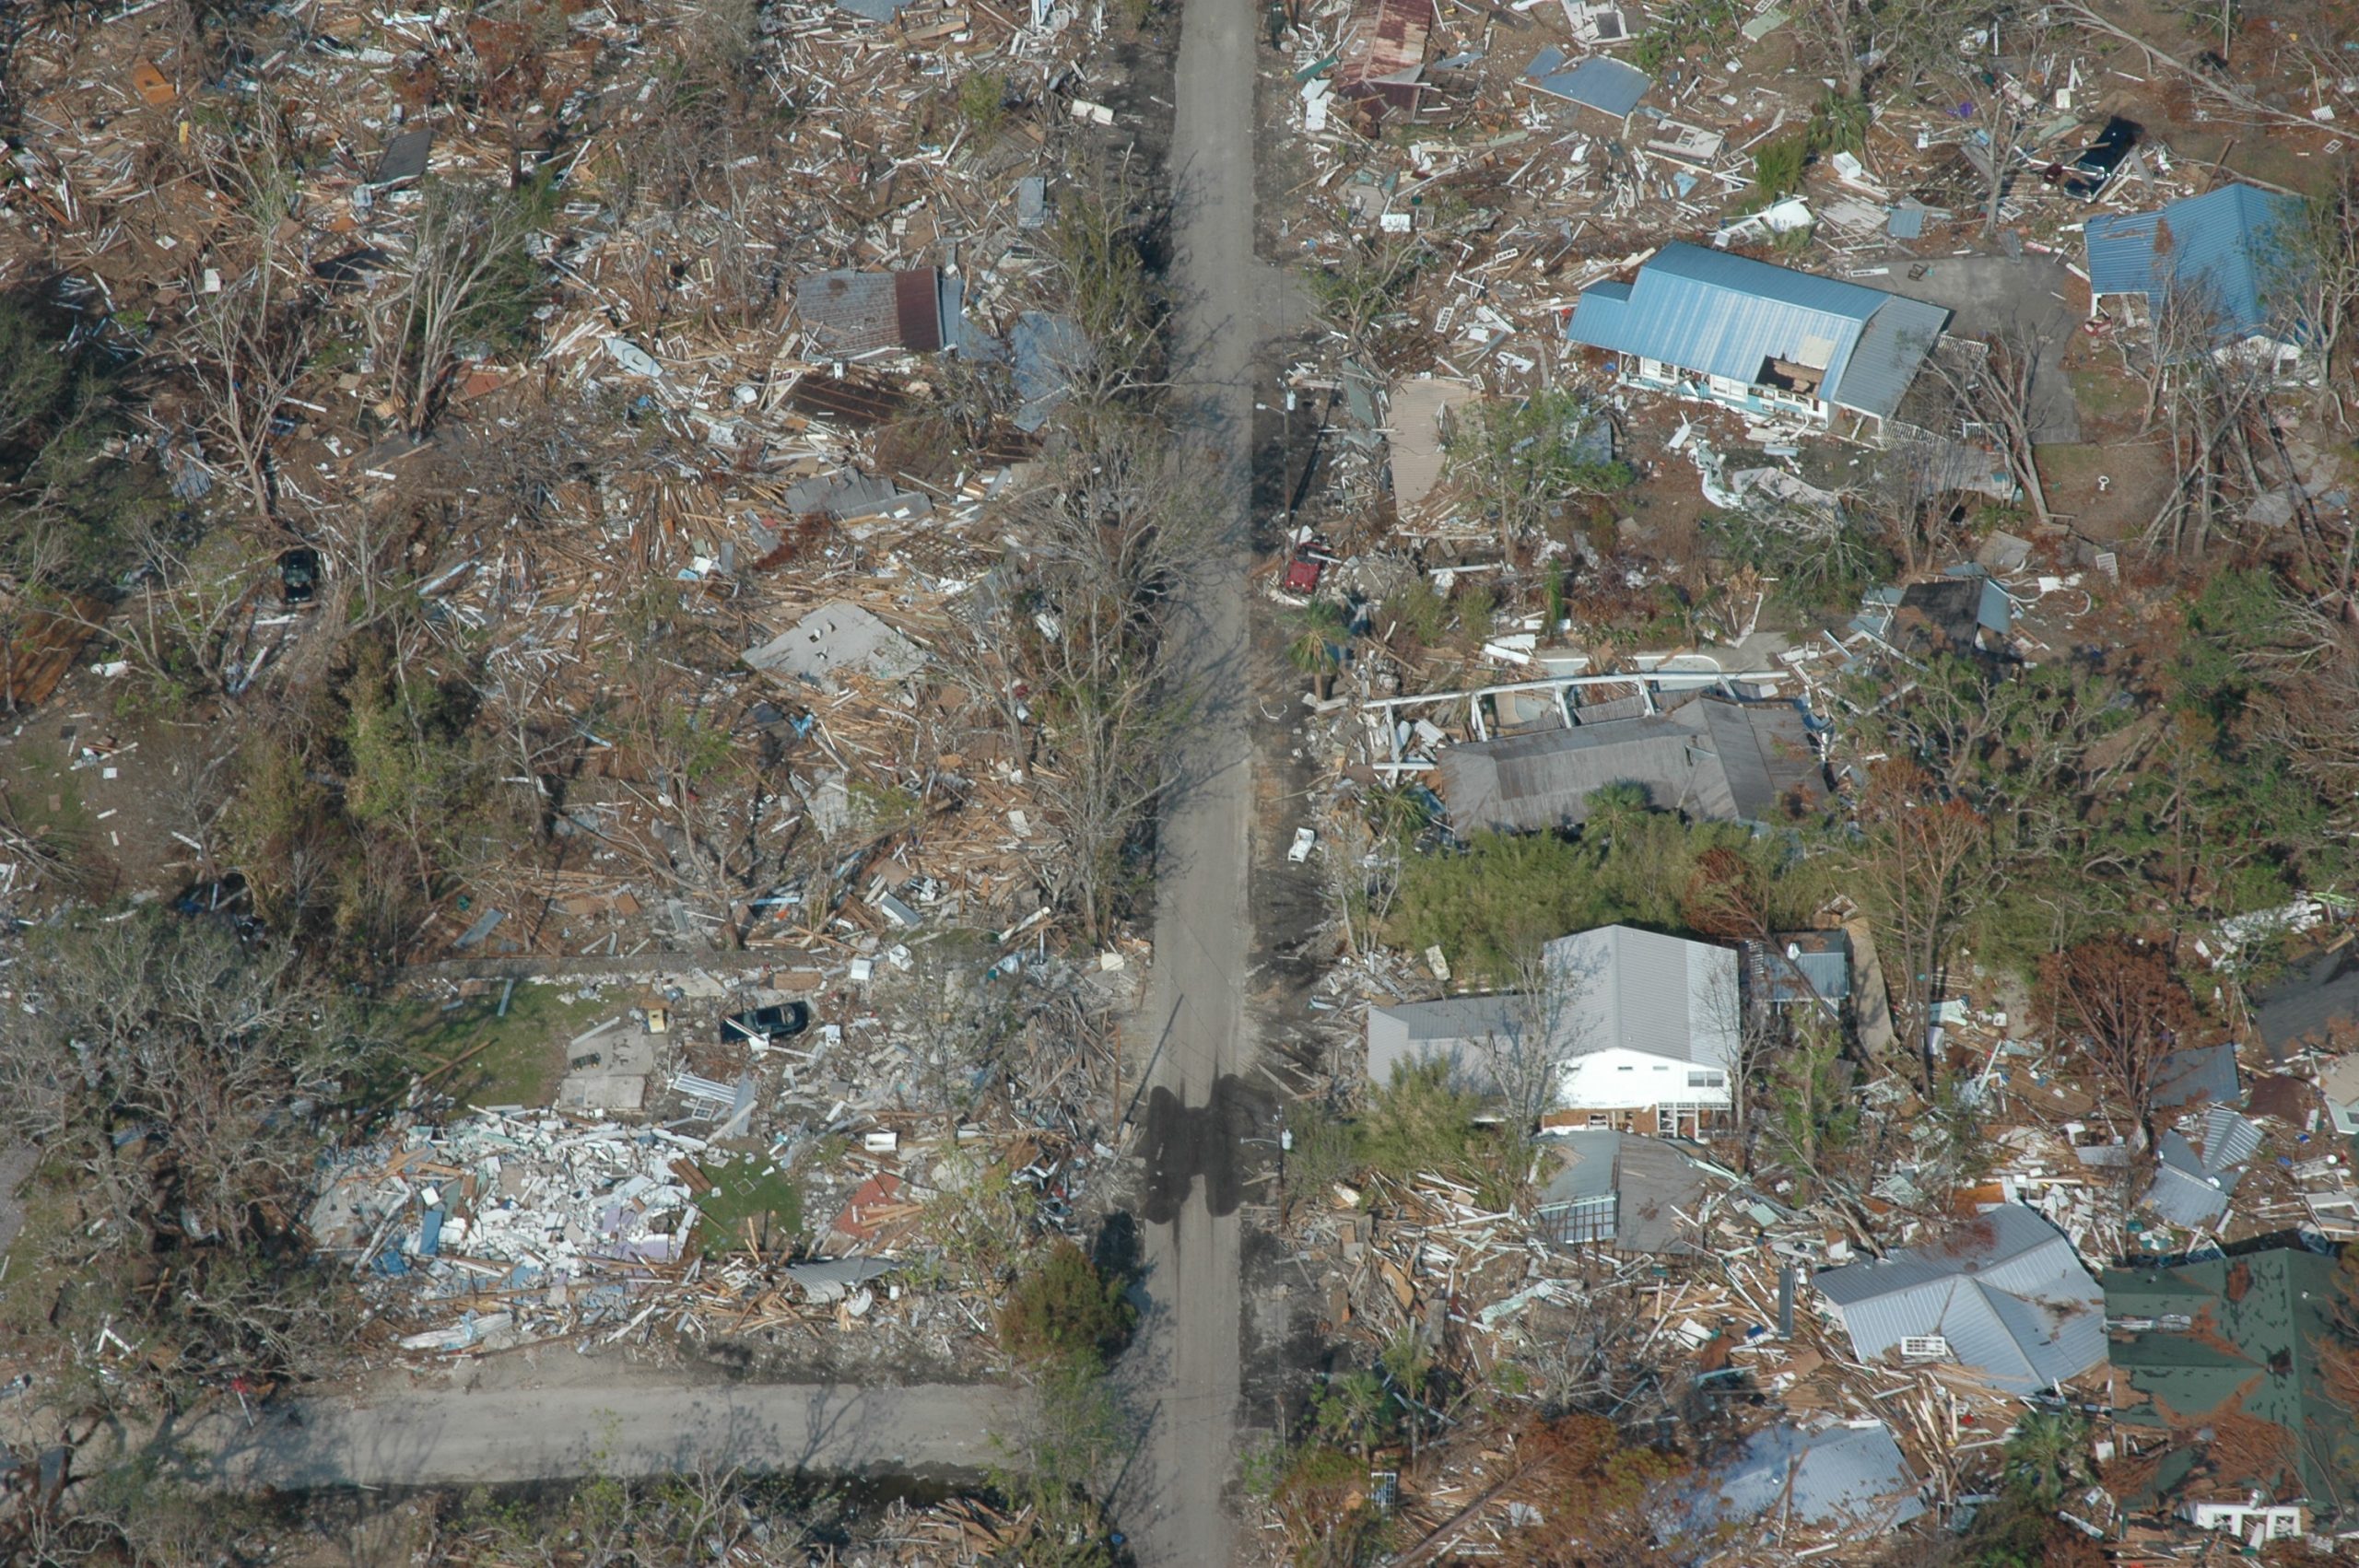 Remembering Hurricane Katrina Photos The Unwritten Record 